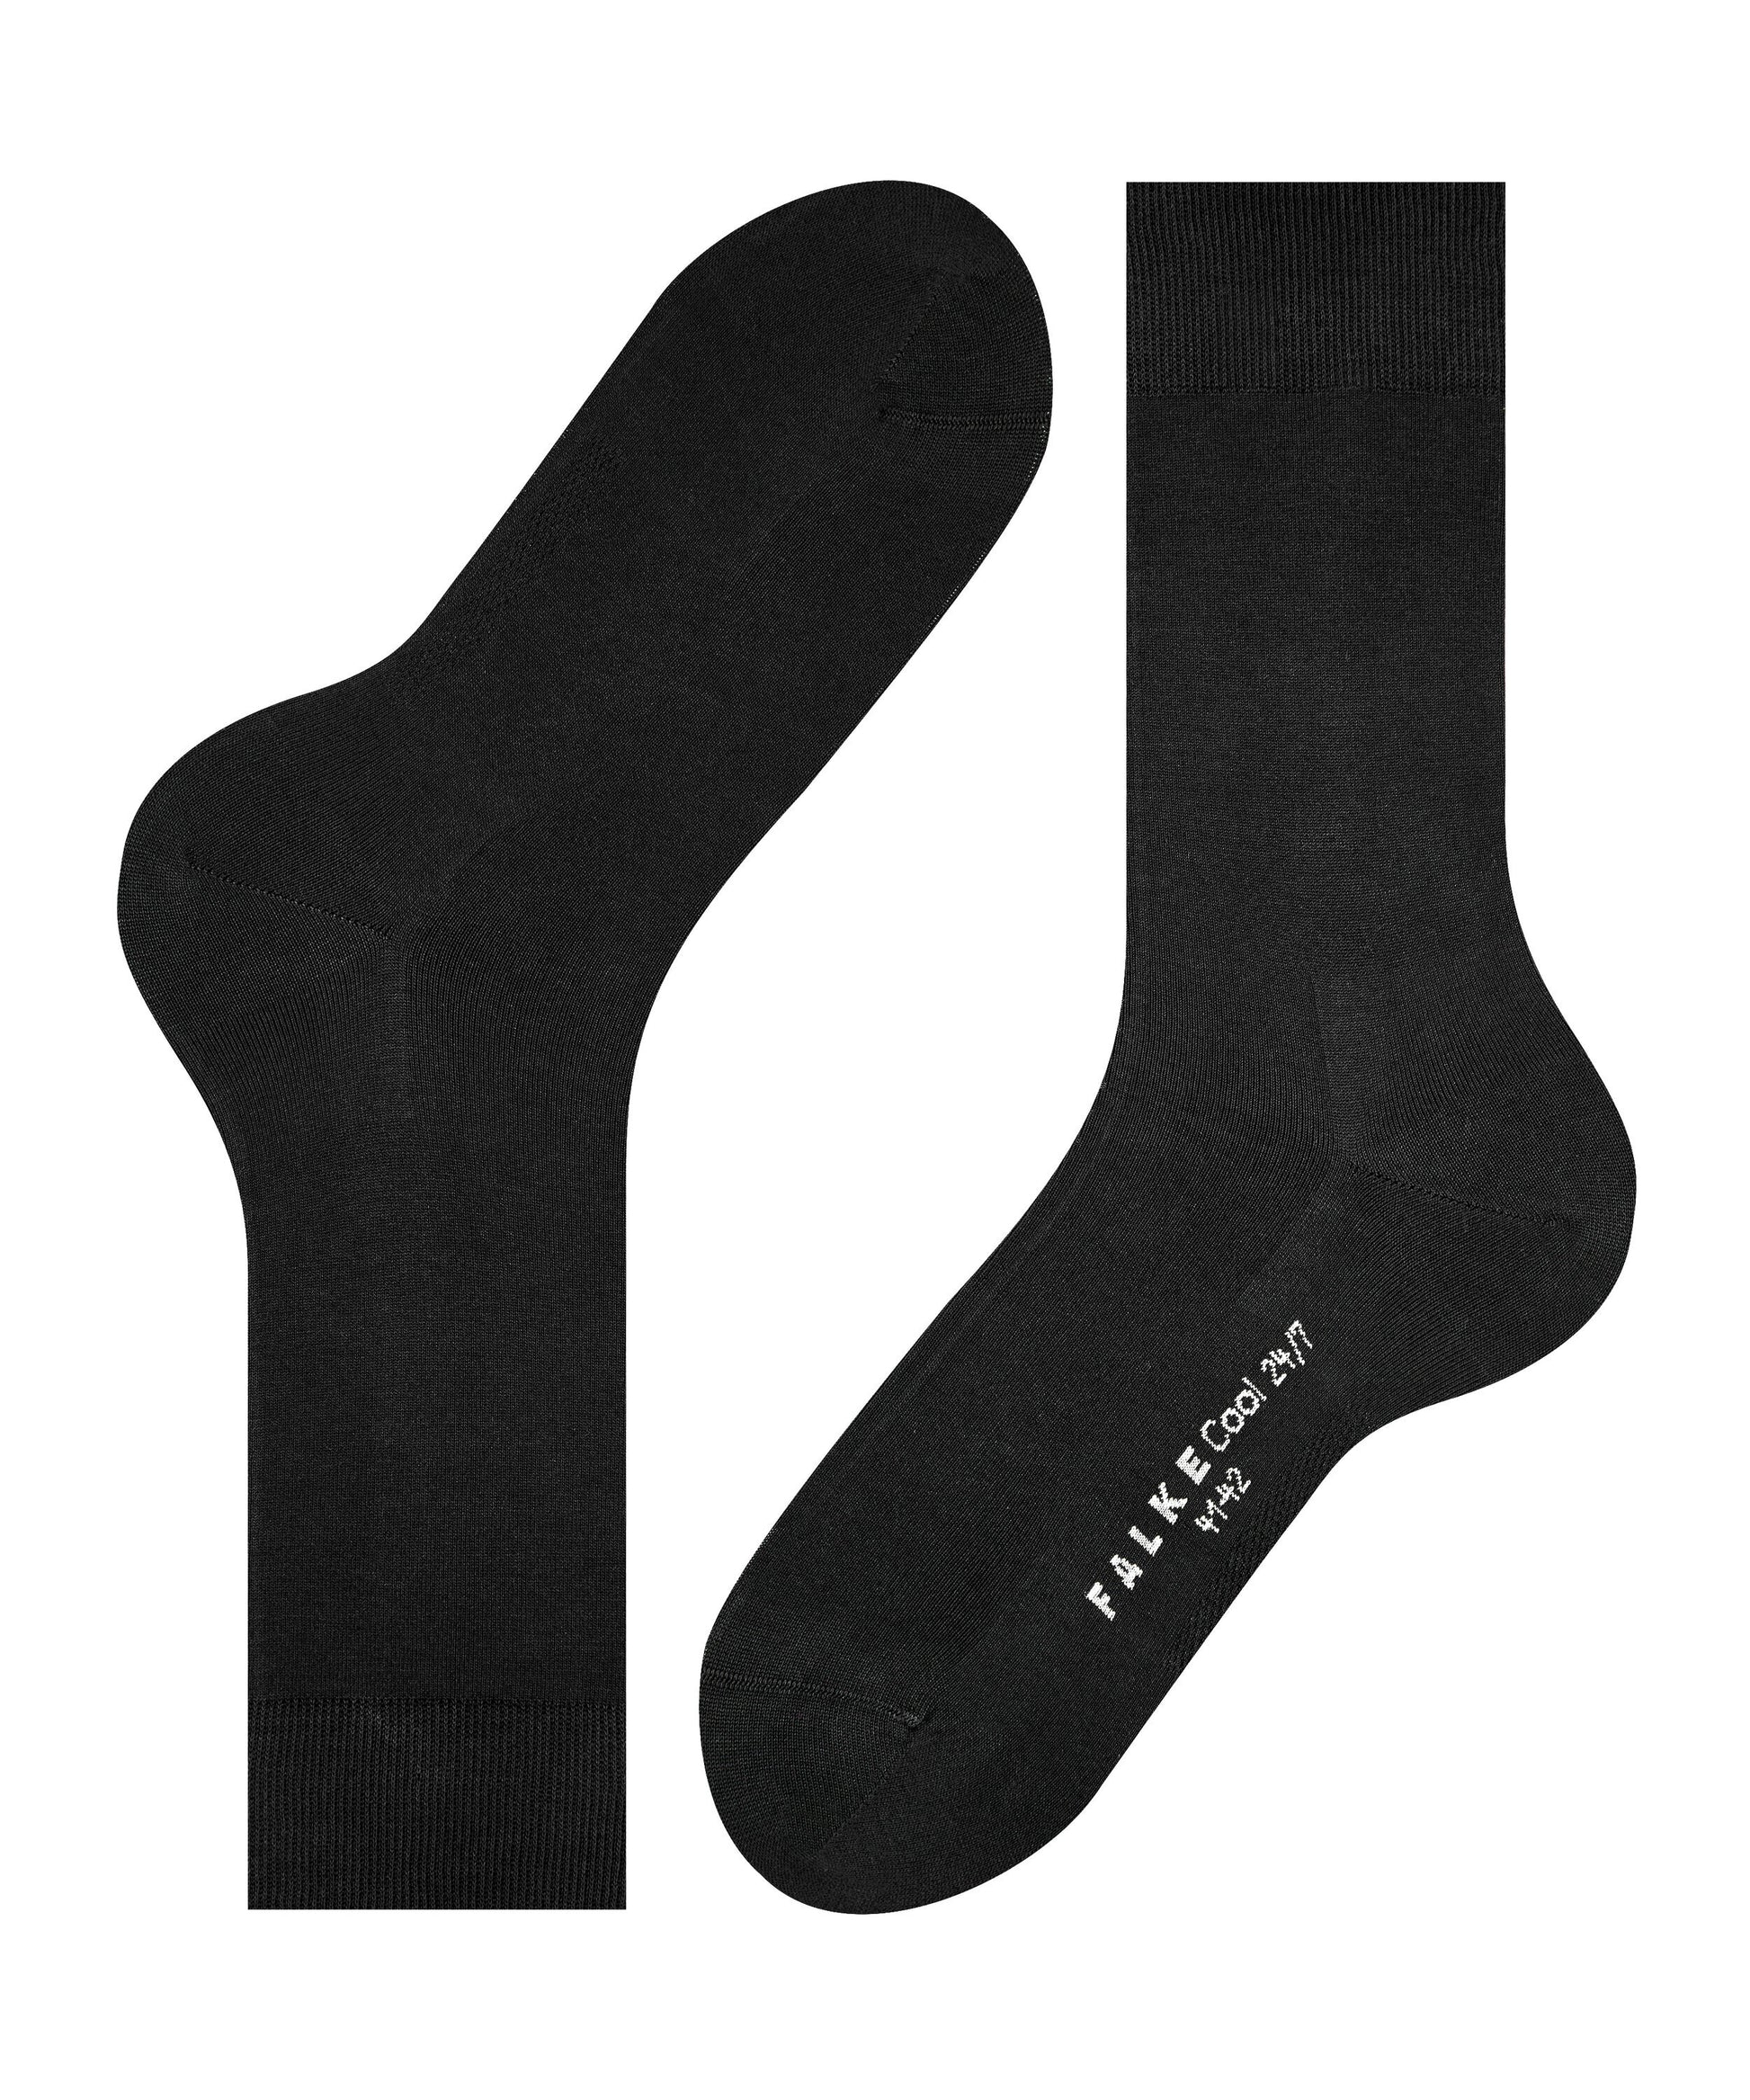 Socken Cool 24/7 (Black)